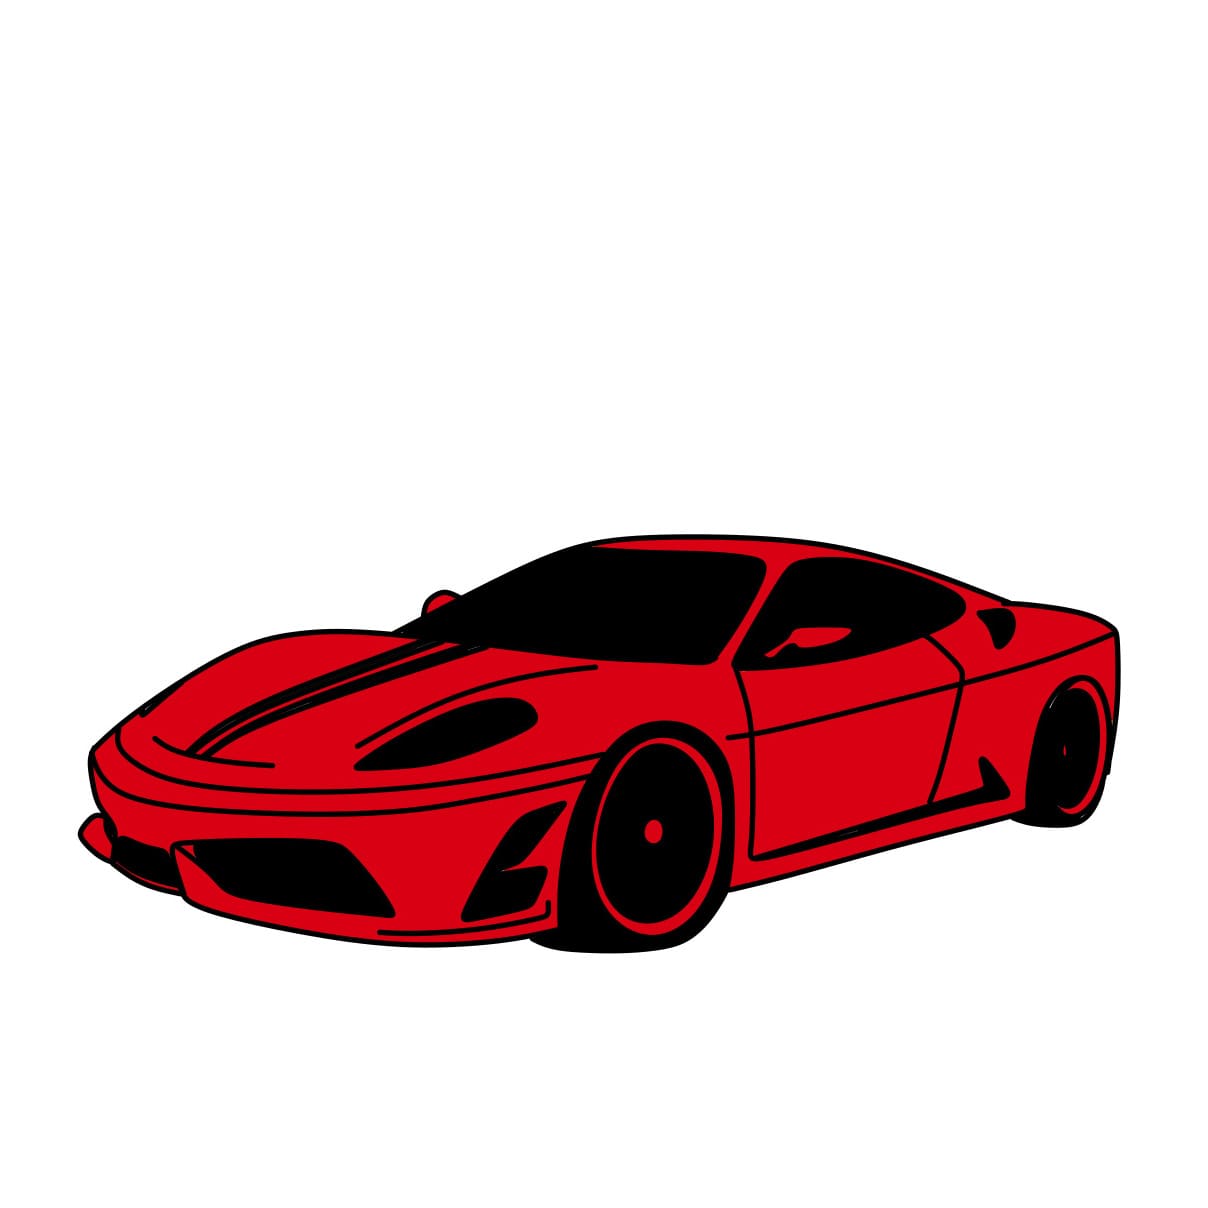 Cach-ve-xe-Ferrari-Buoc-6-6